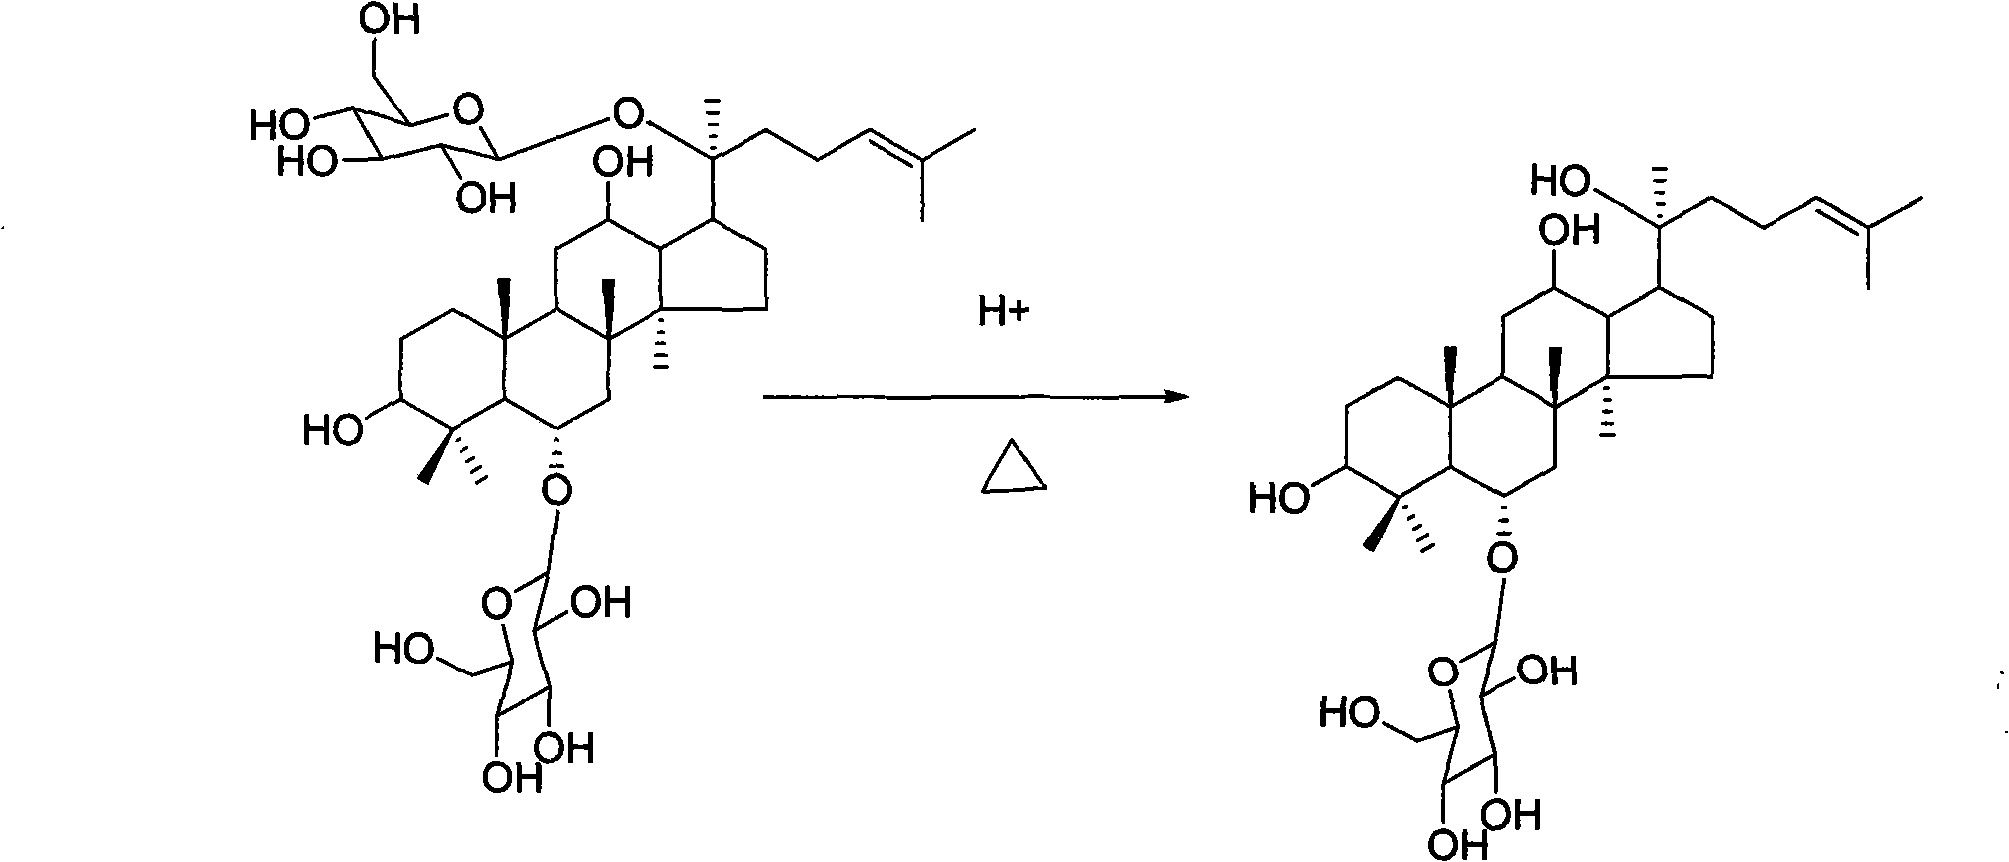 Method for preparing ginsenoside Rh1